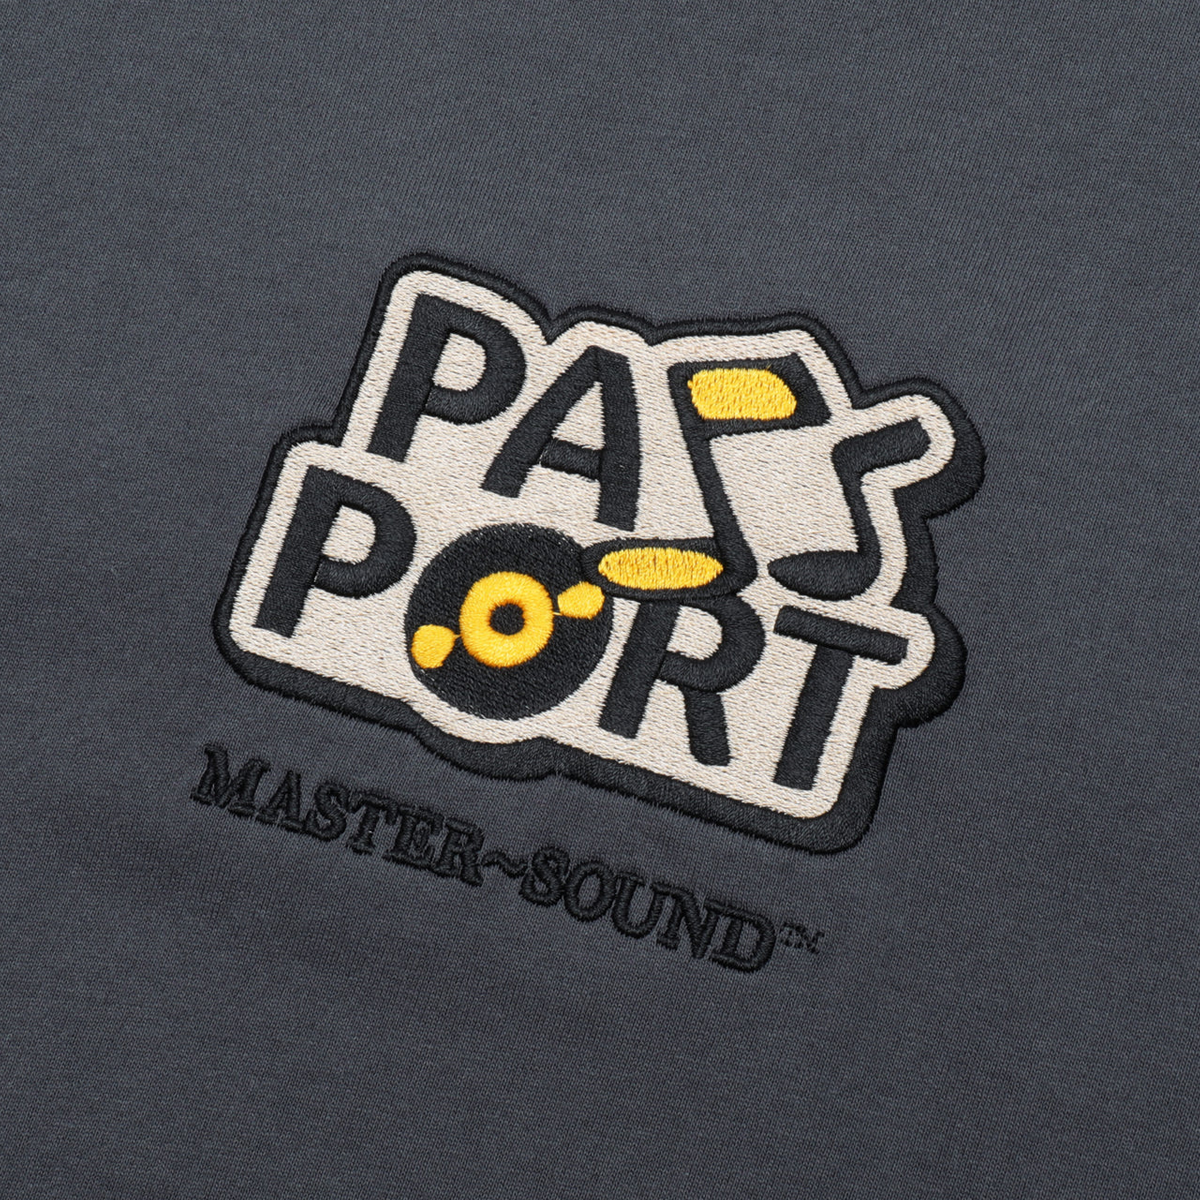 Passport Master~Sound T-Shirt - Tar